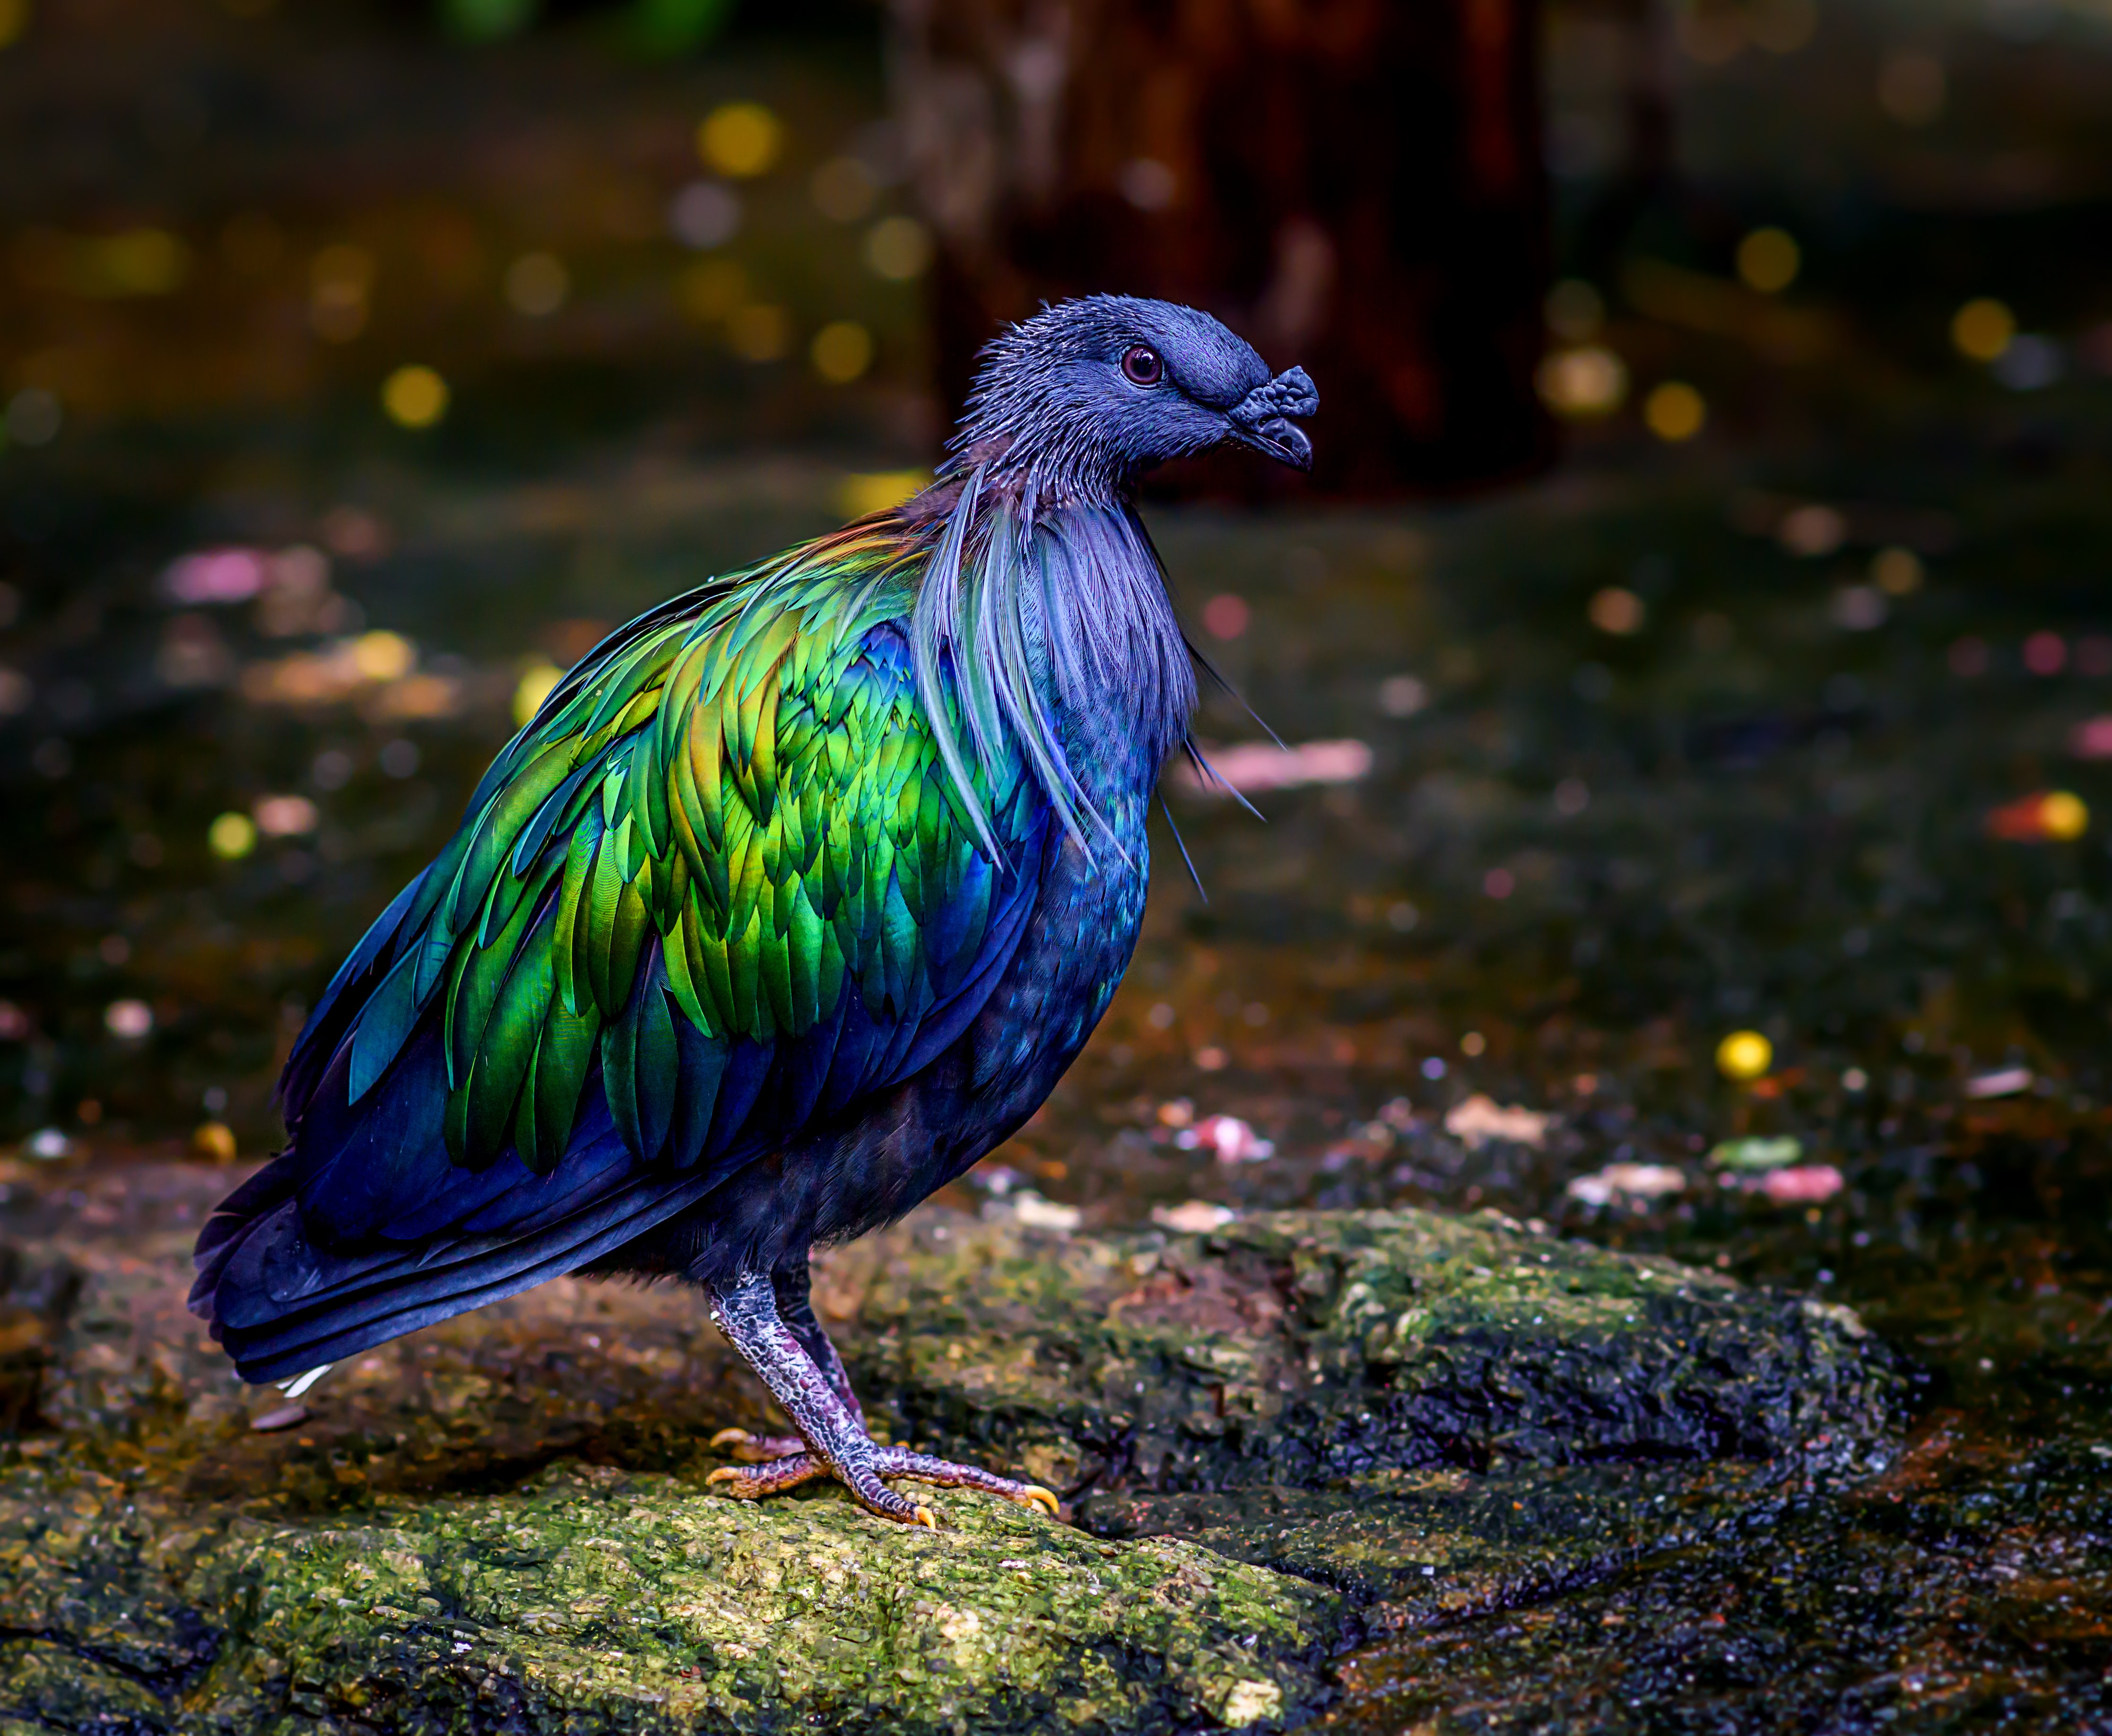 A Nicobar pigeon | Source: Shutterstock